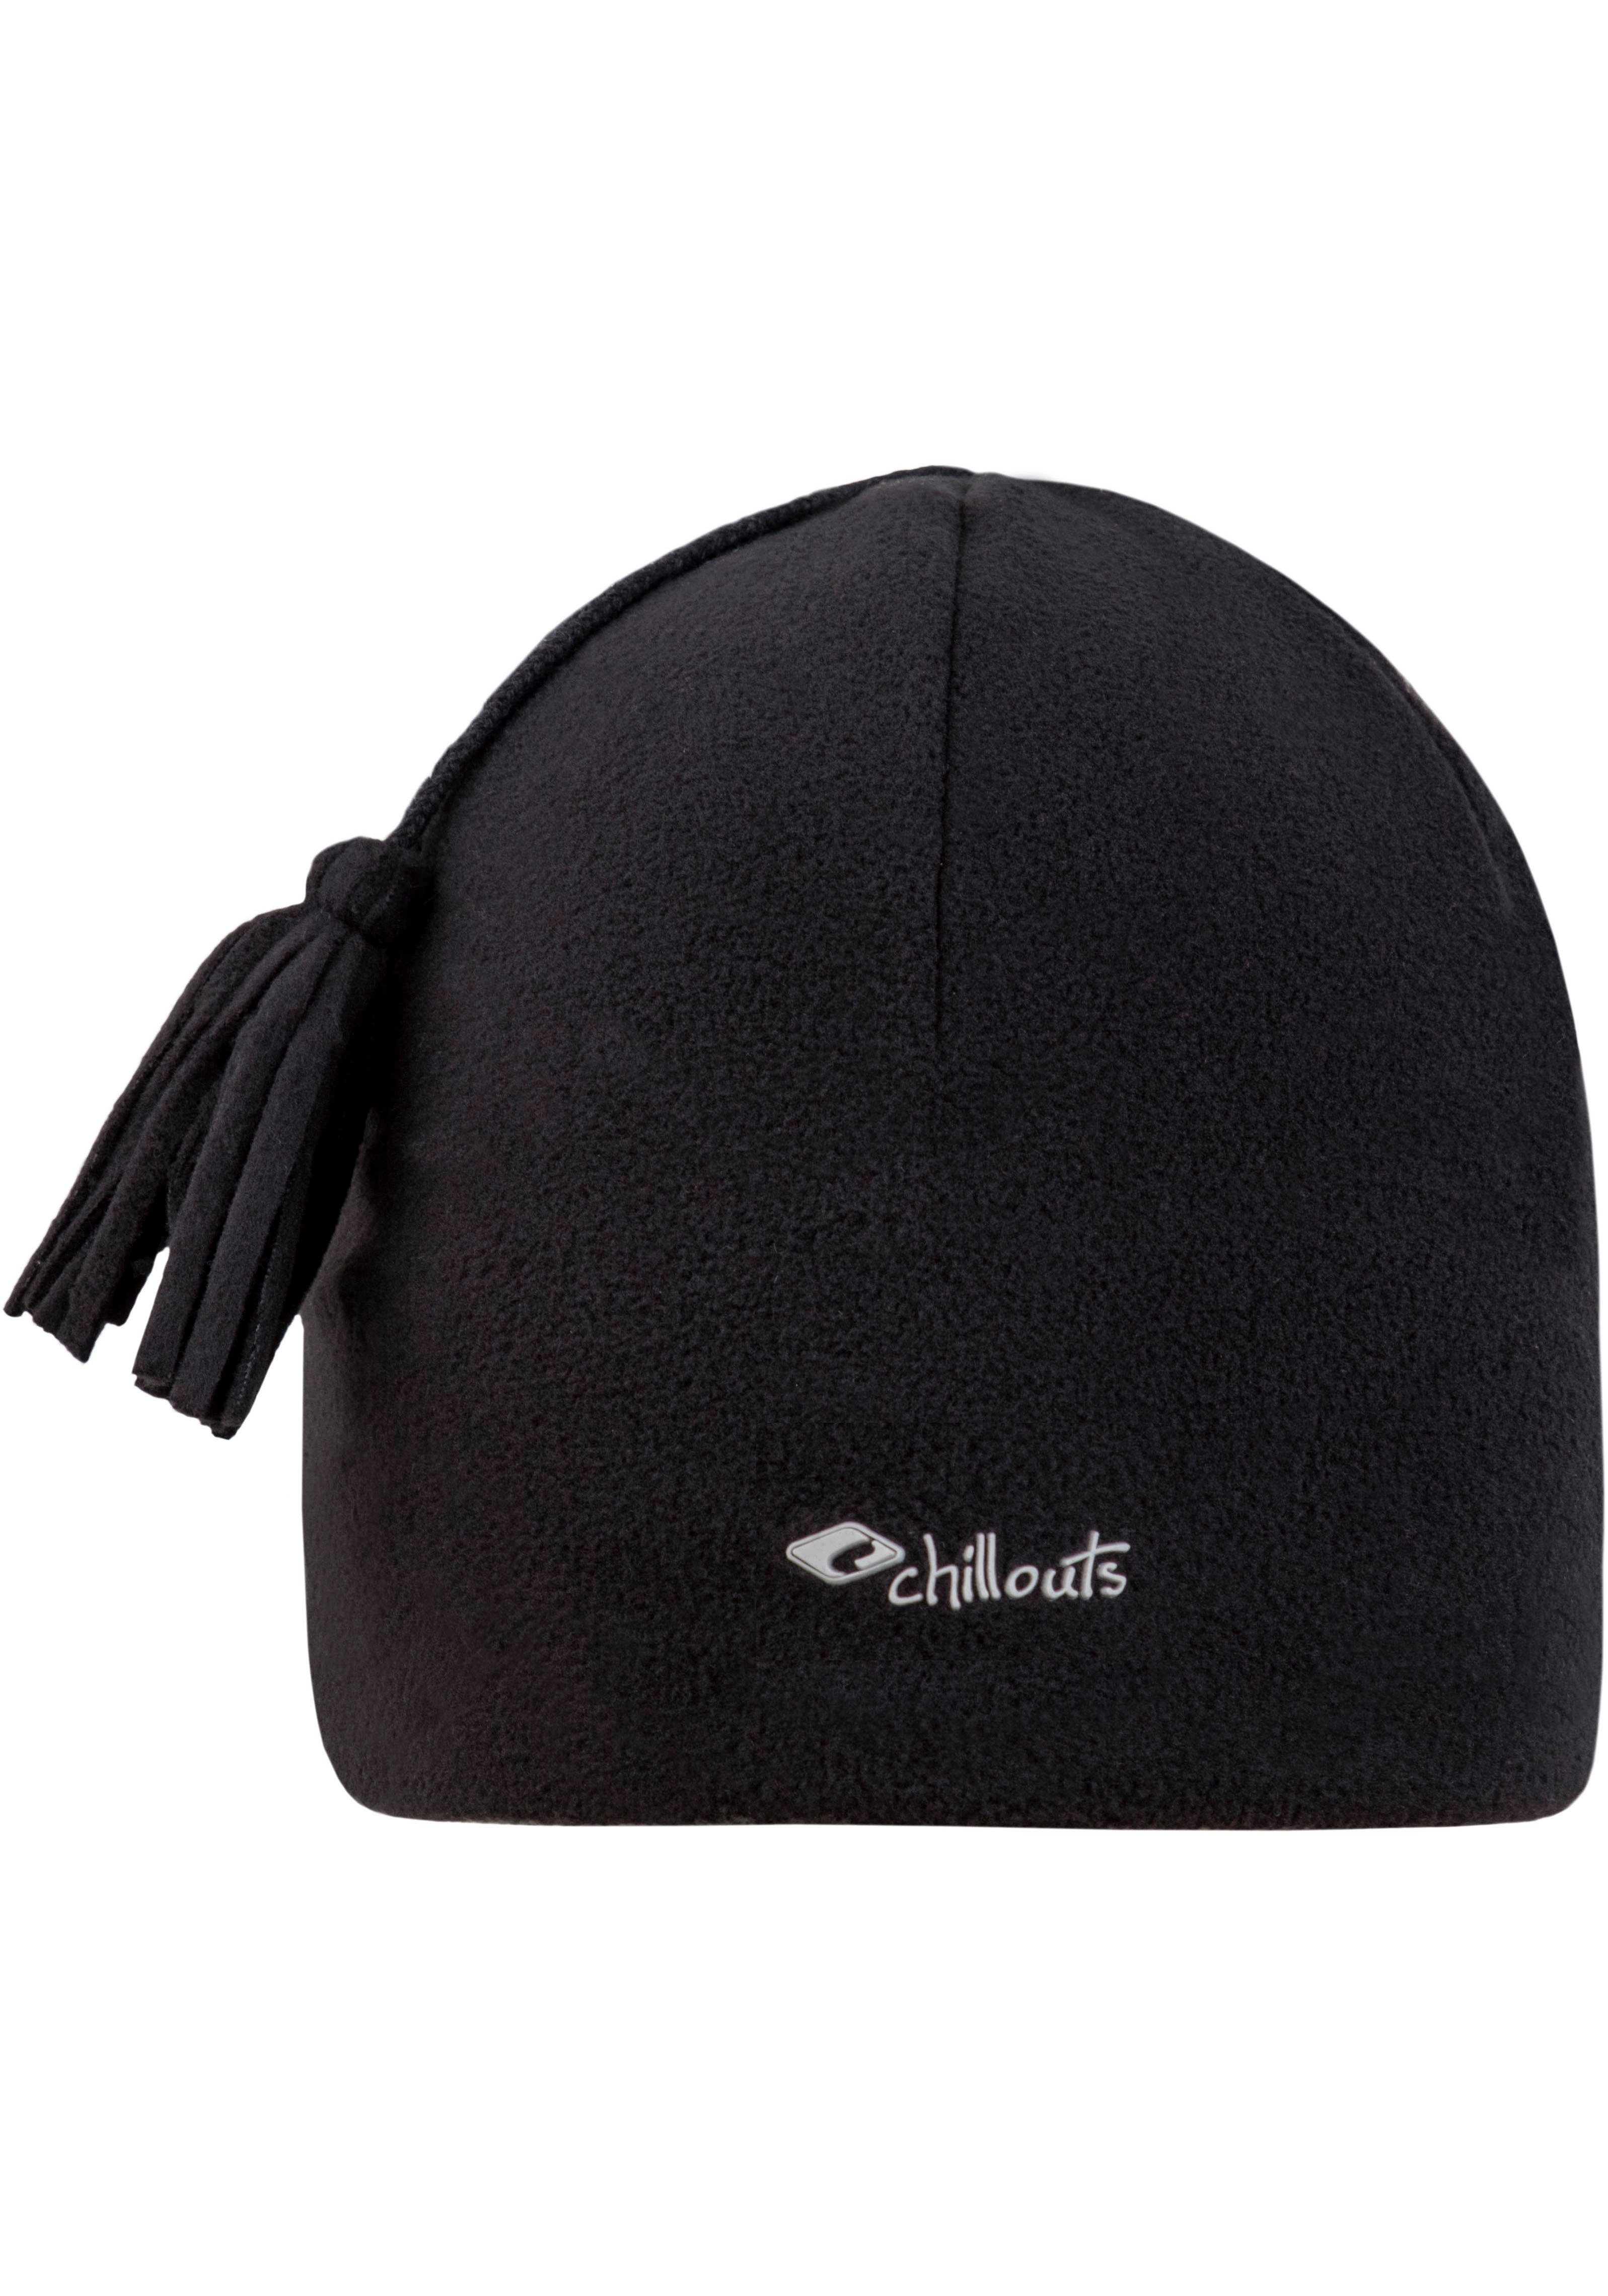 Pom Hat Fleecemütze Freeze Fleece chillouts black